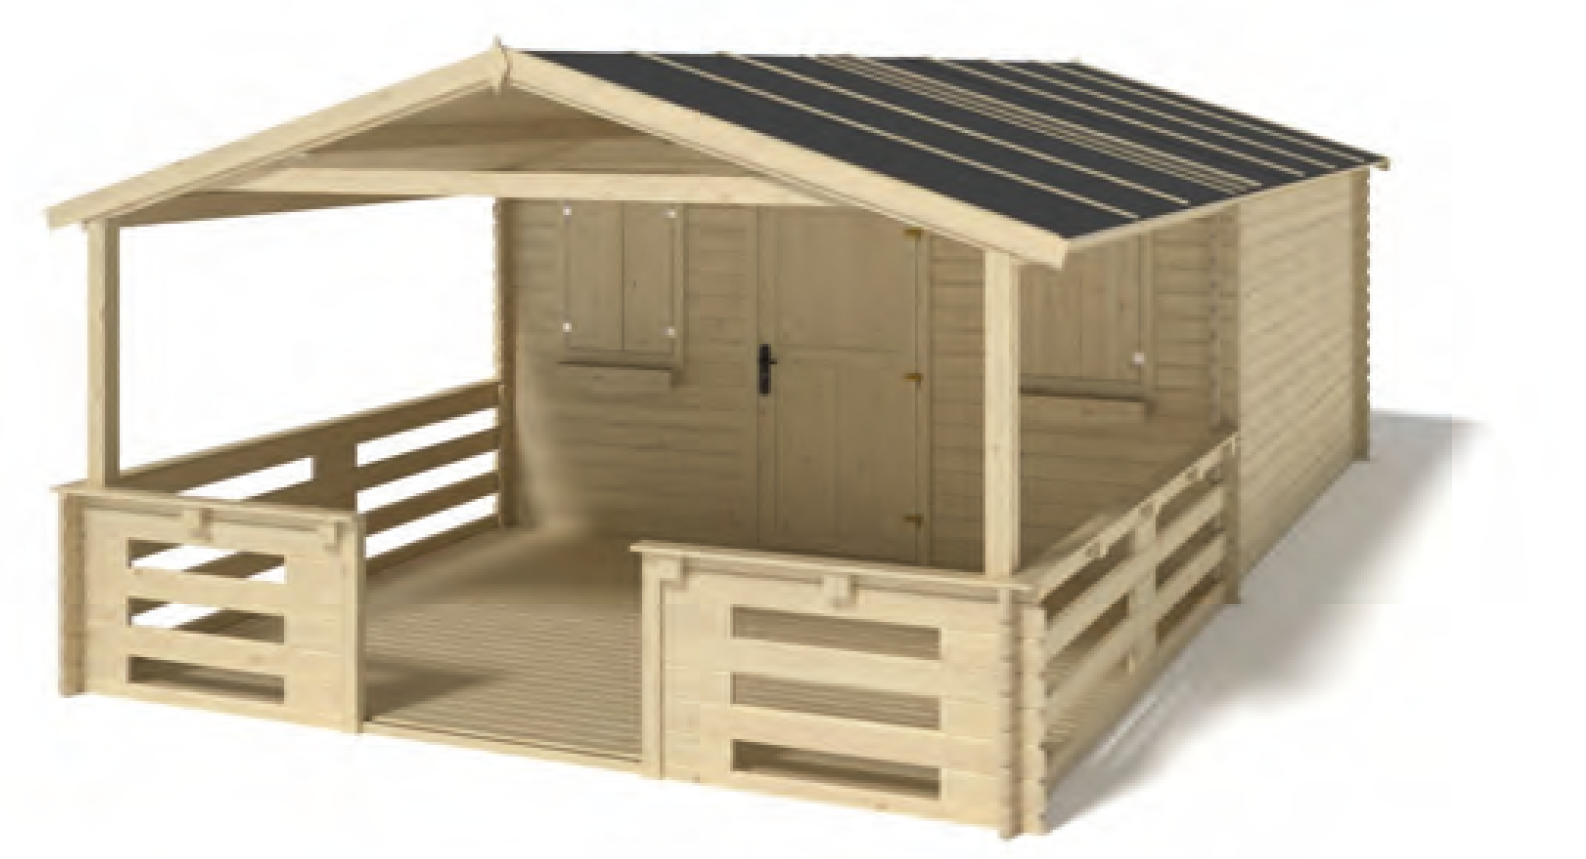 Alps Garden Shelter with porch option 400 x 300 x 250 cm